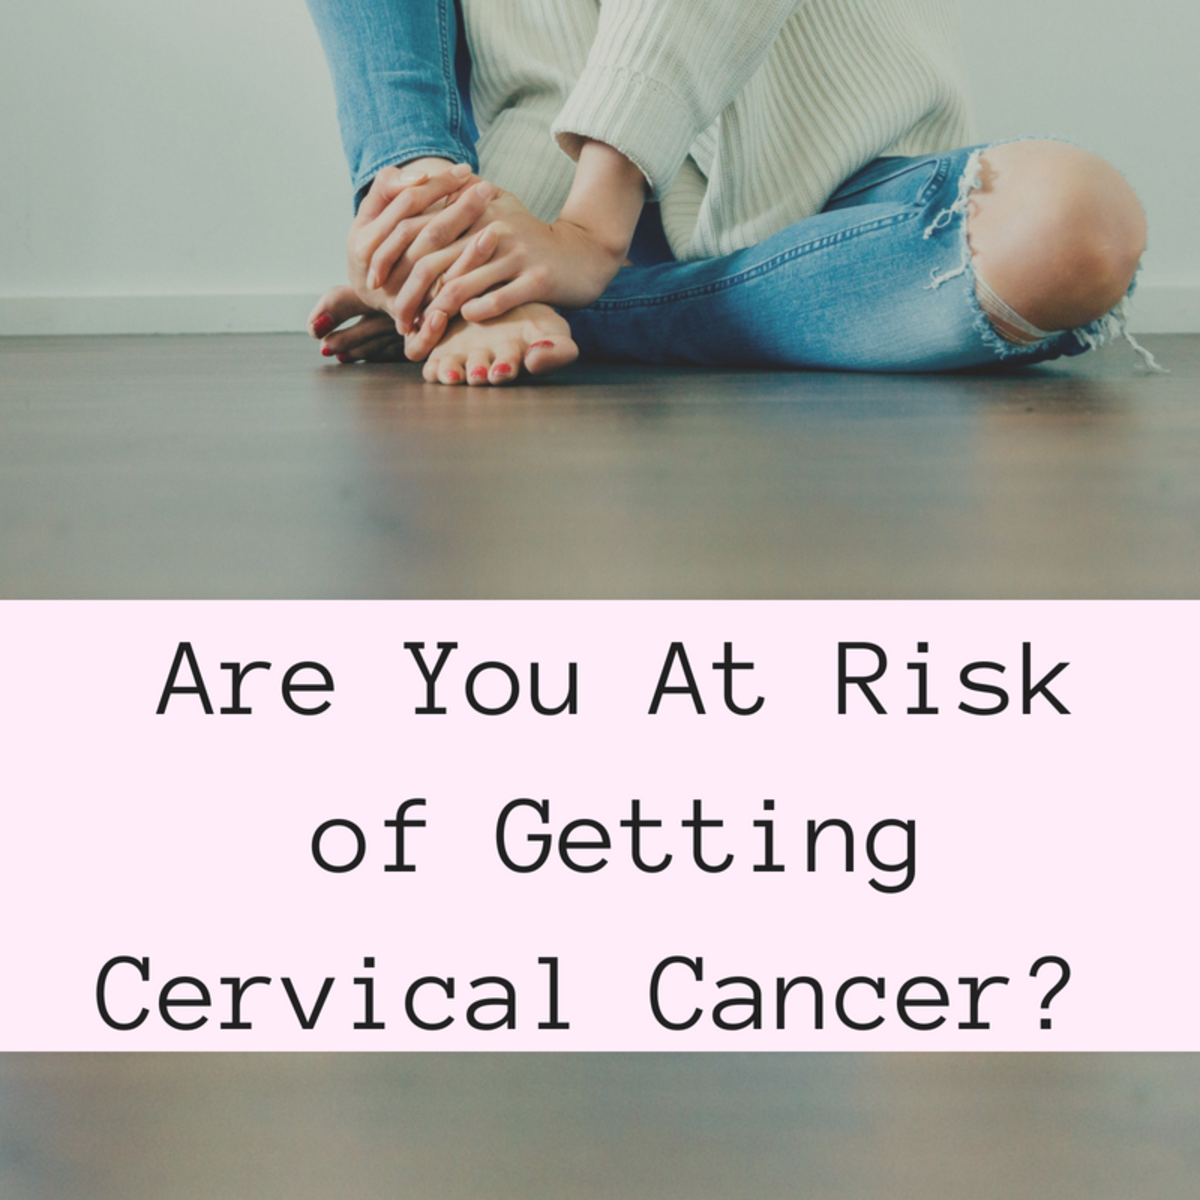 Knowing the risks factors can help prevent cervical cancer.